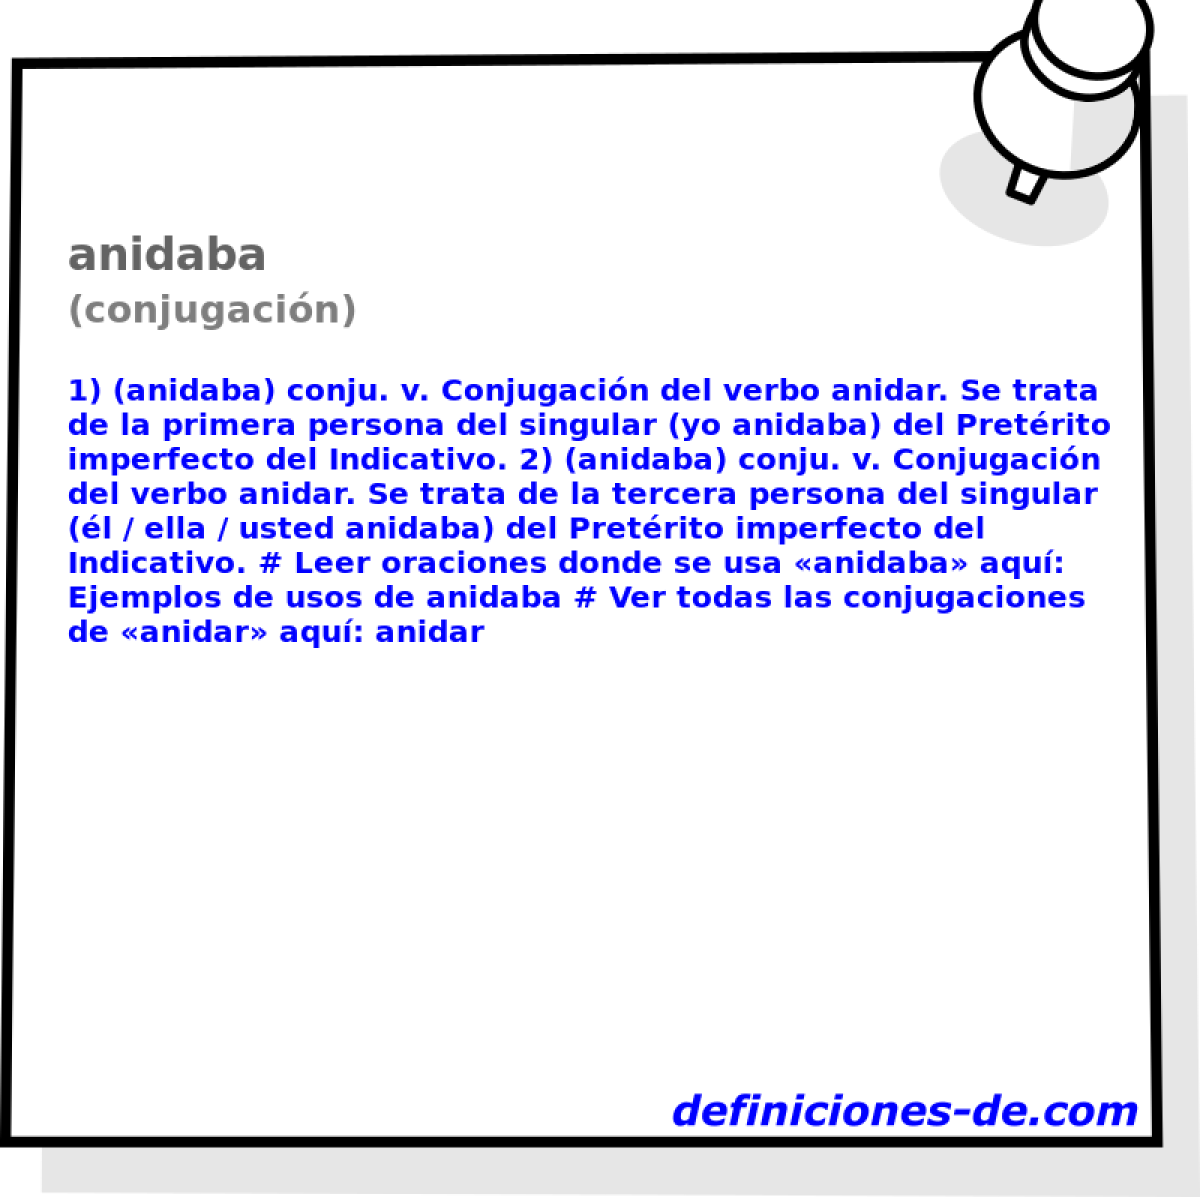 anidaba (conjugacin)